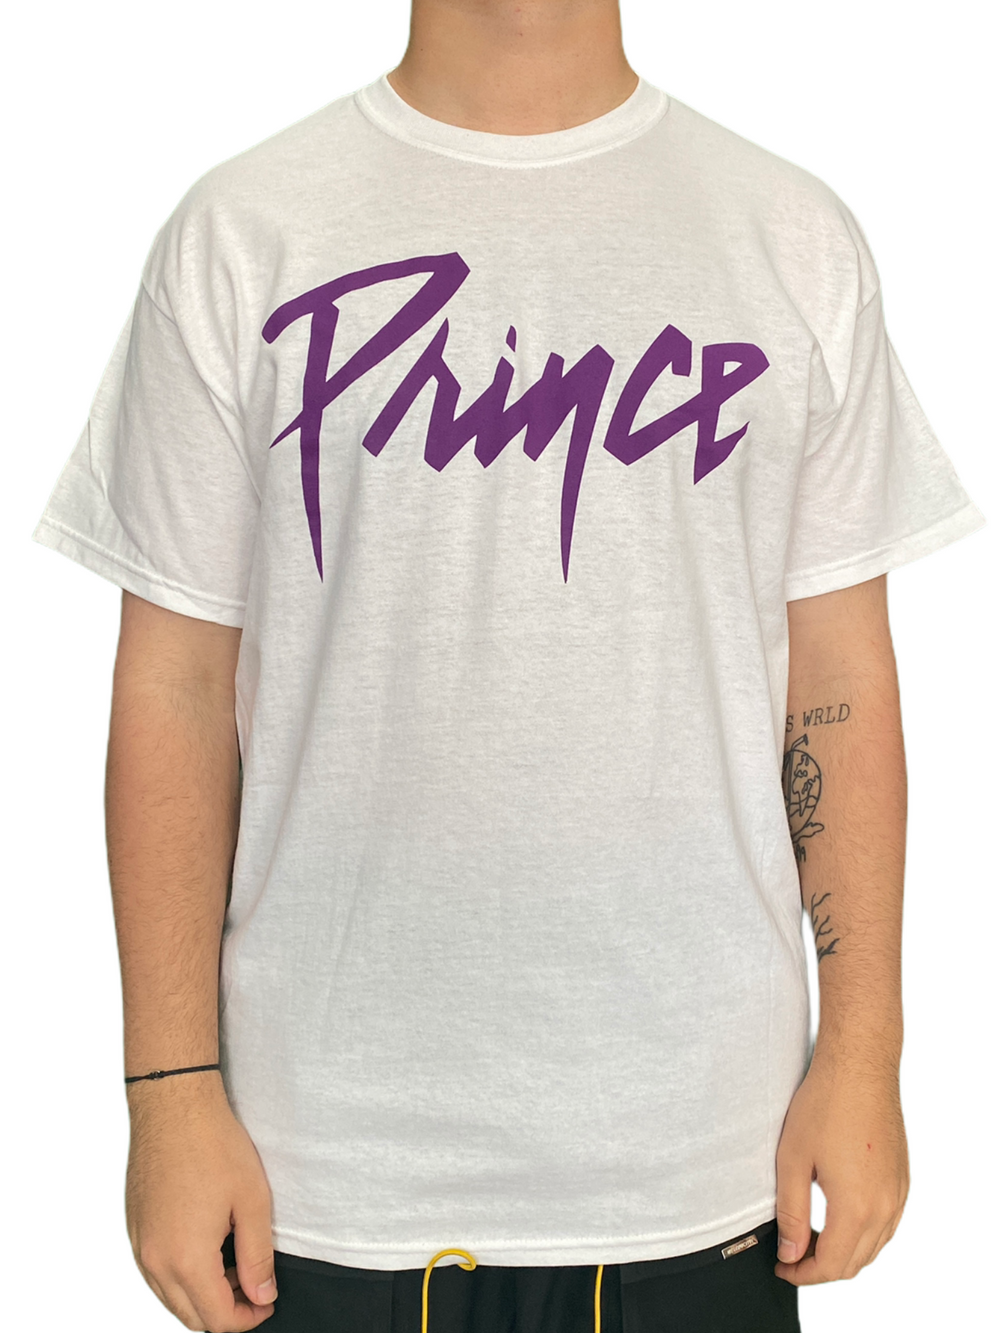 Prince – Purple Rain Logo Unisex Official T Shirt Various Sizes PU Text NEW